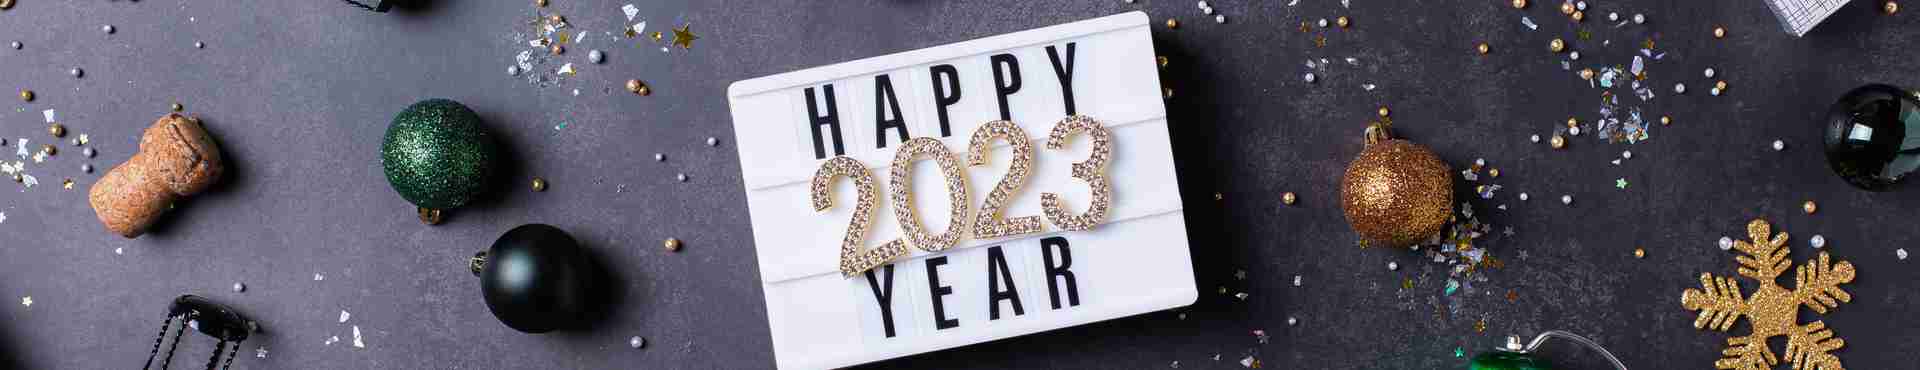 happy-new-year-greeting-card-2023-with-champagne-2022-10-17-22-44-20-utc.jpg